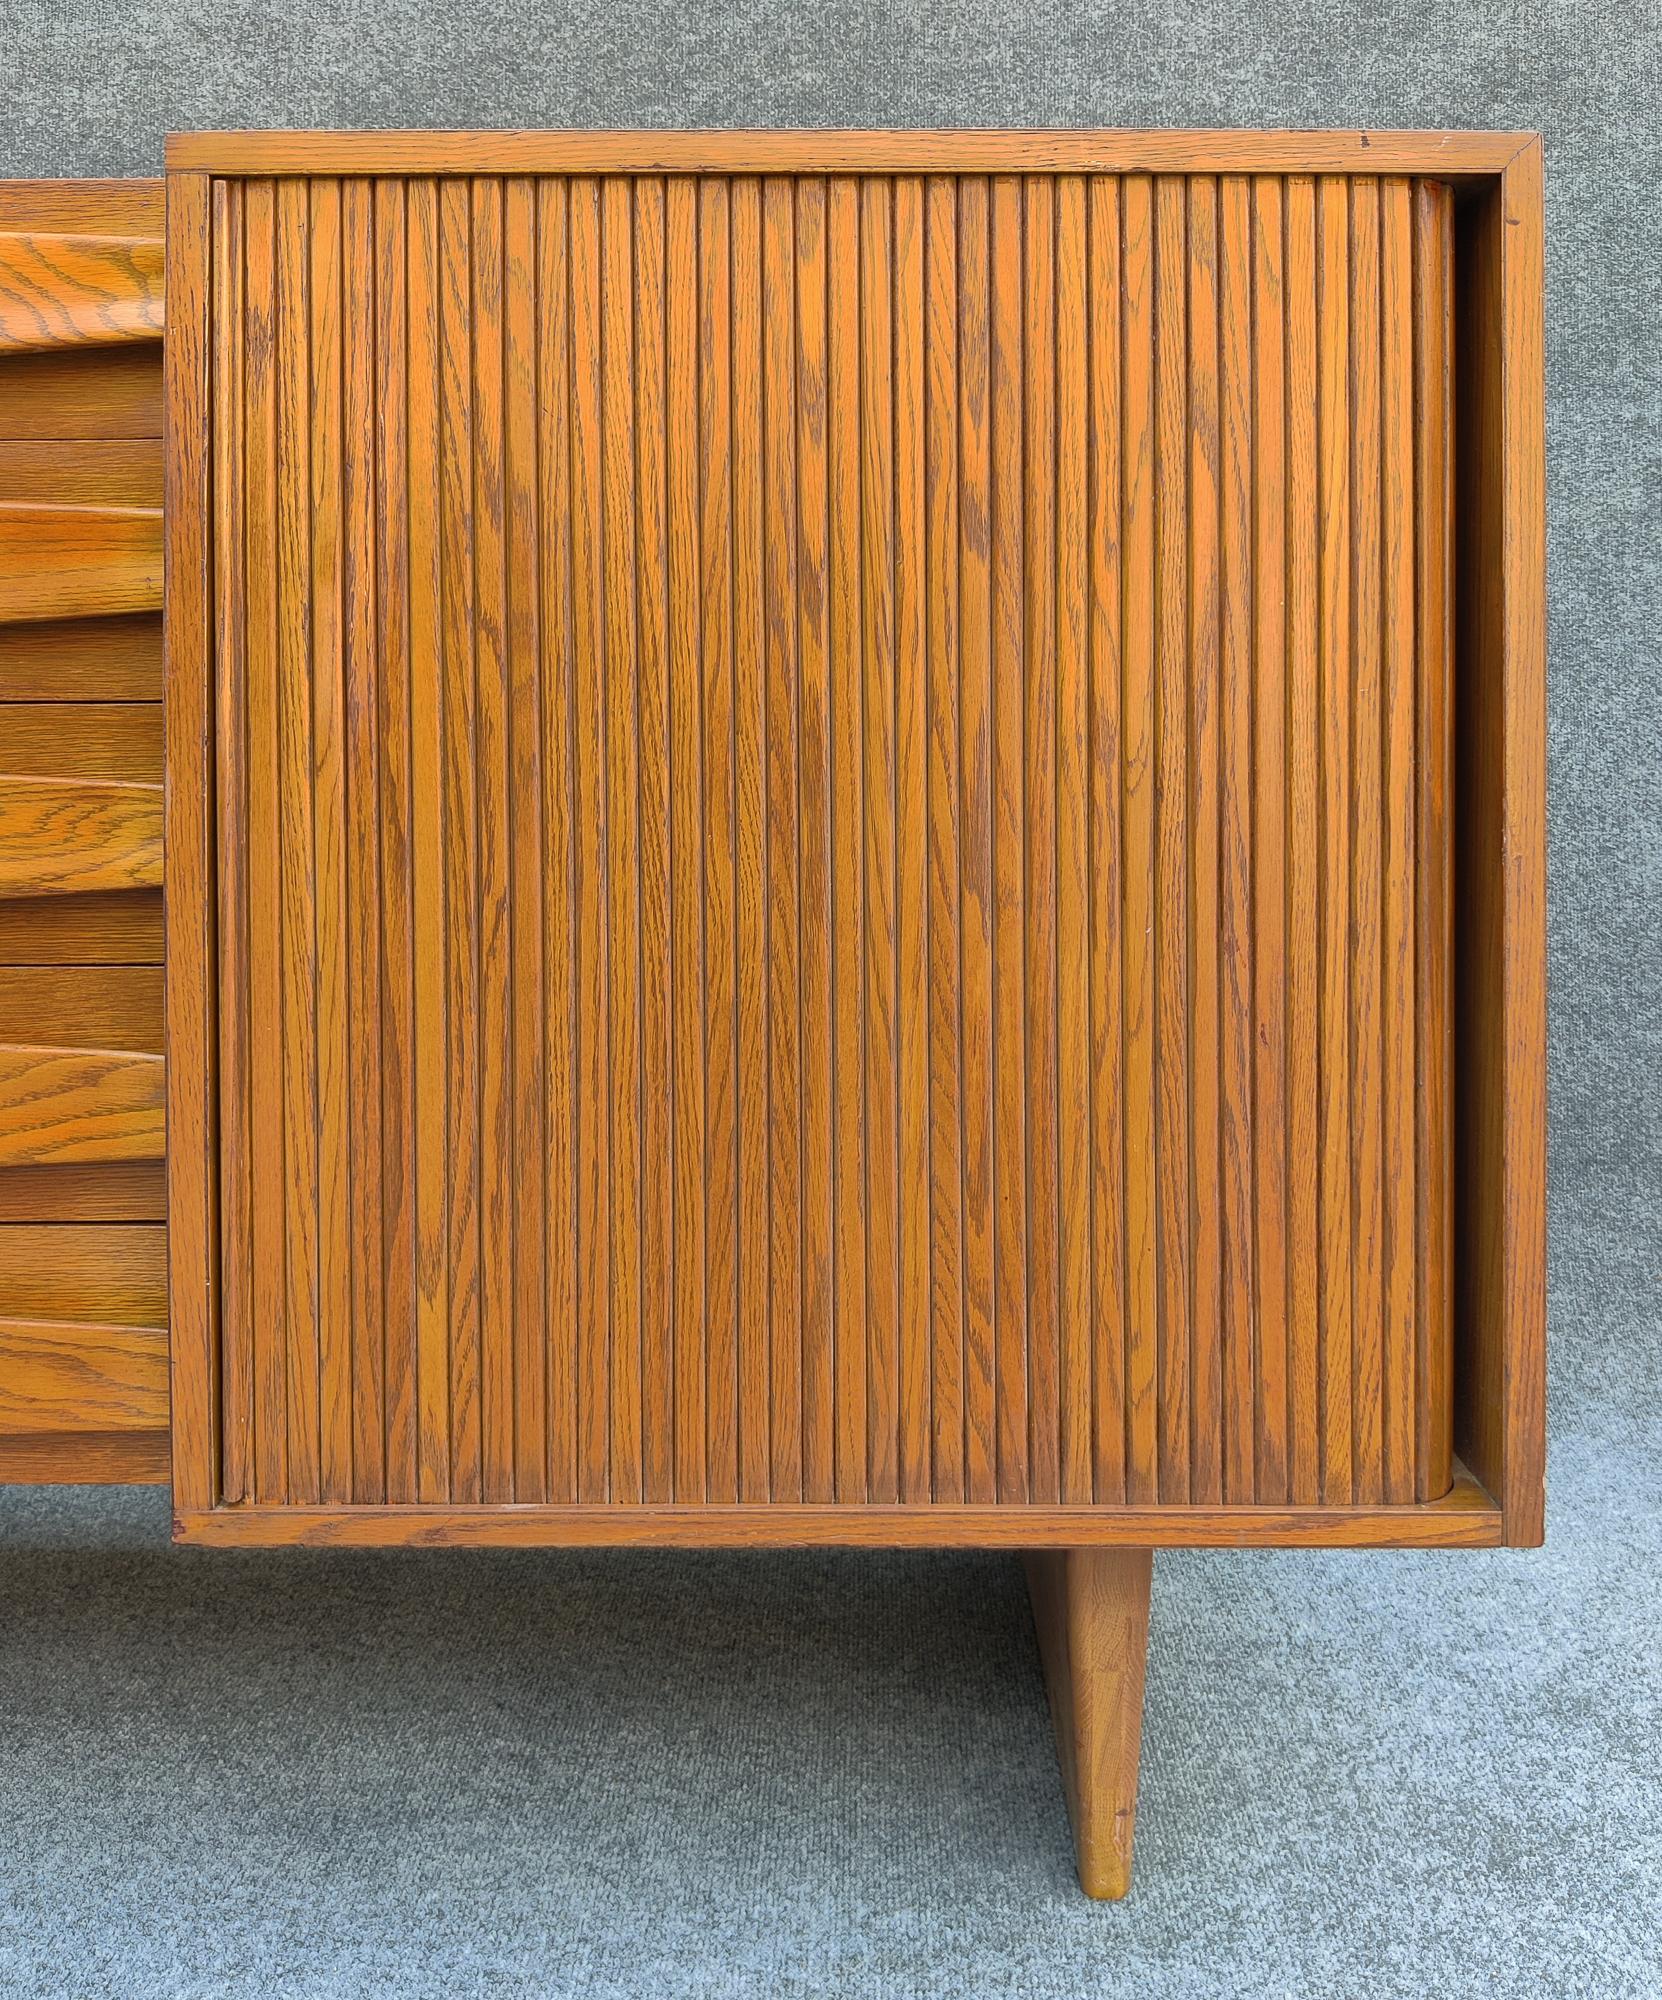 Carved Harold Schwartz Romweber Oak Tambour Cabinet, Sculptural & Architectural 1950s For Sale